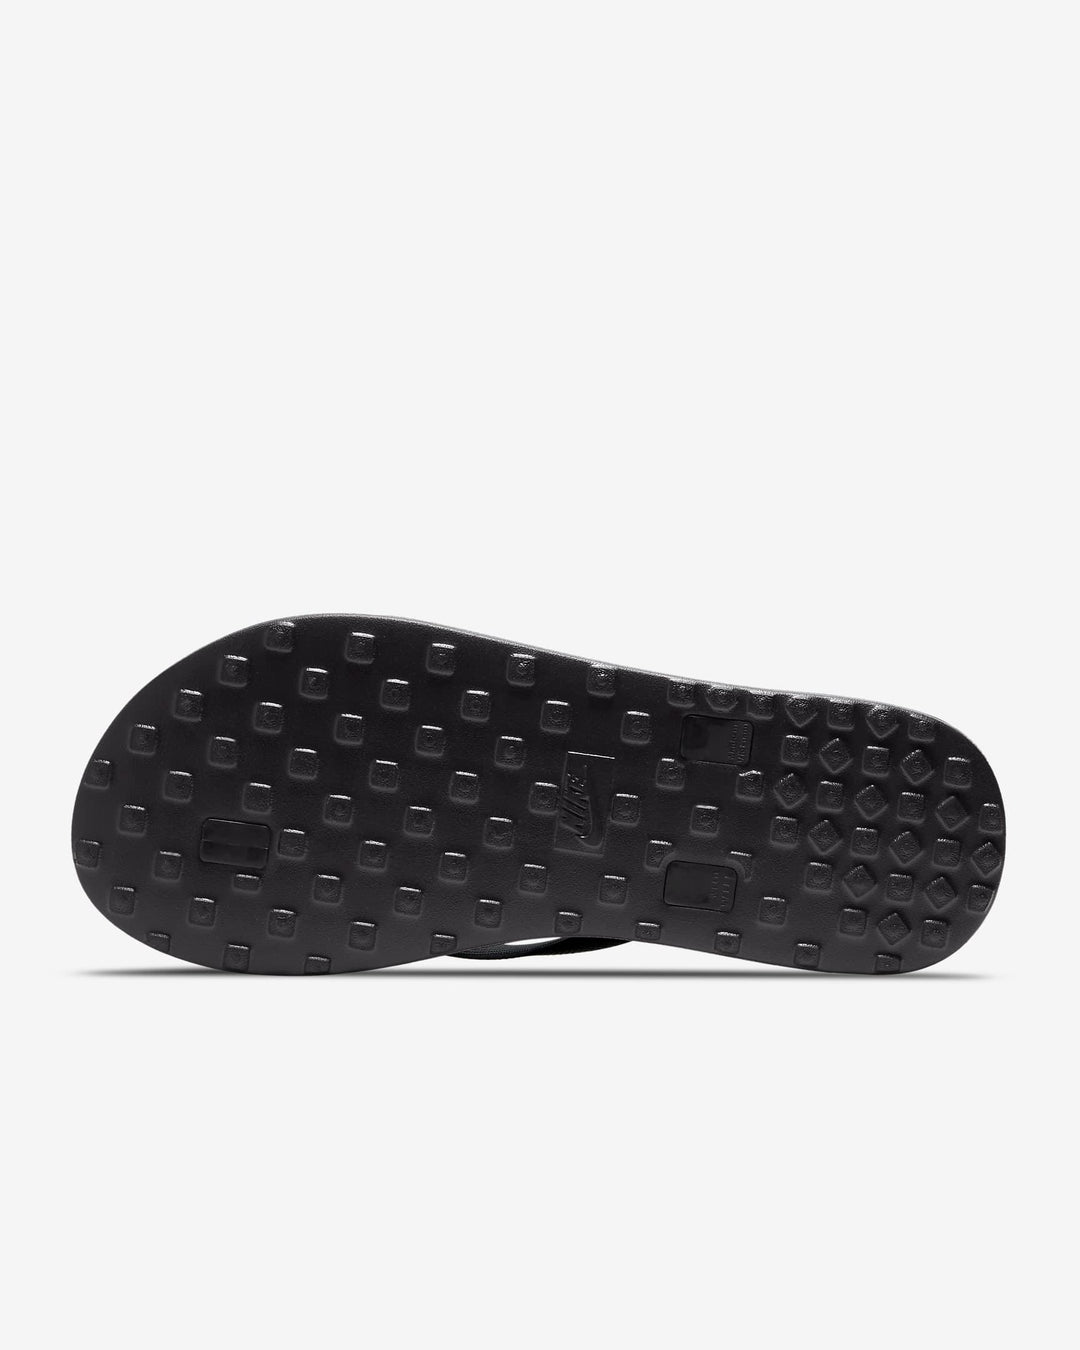 Dép Nike On Deck Men Slides #Black - Kallos Vietnam